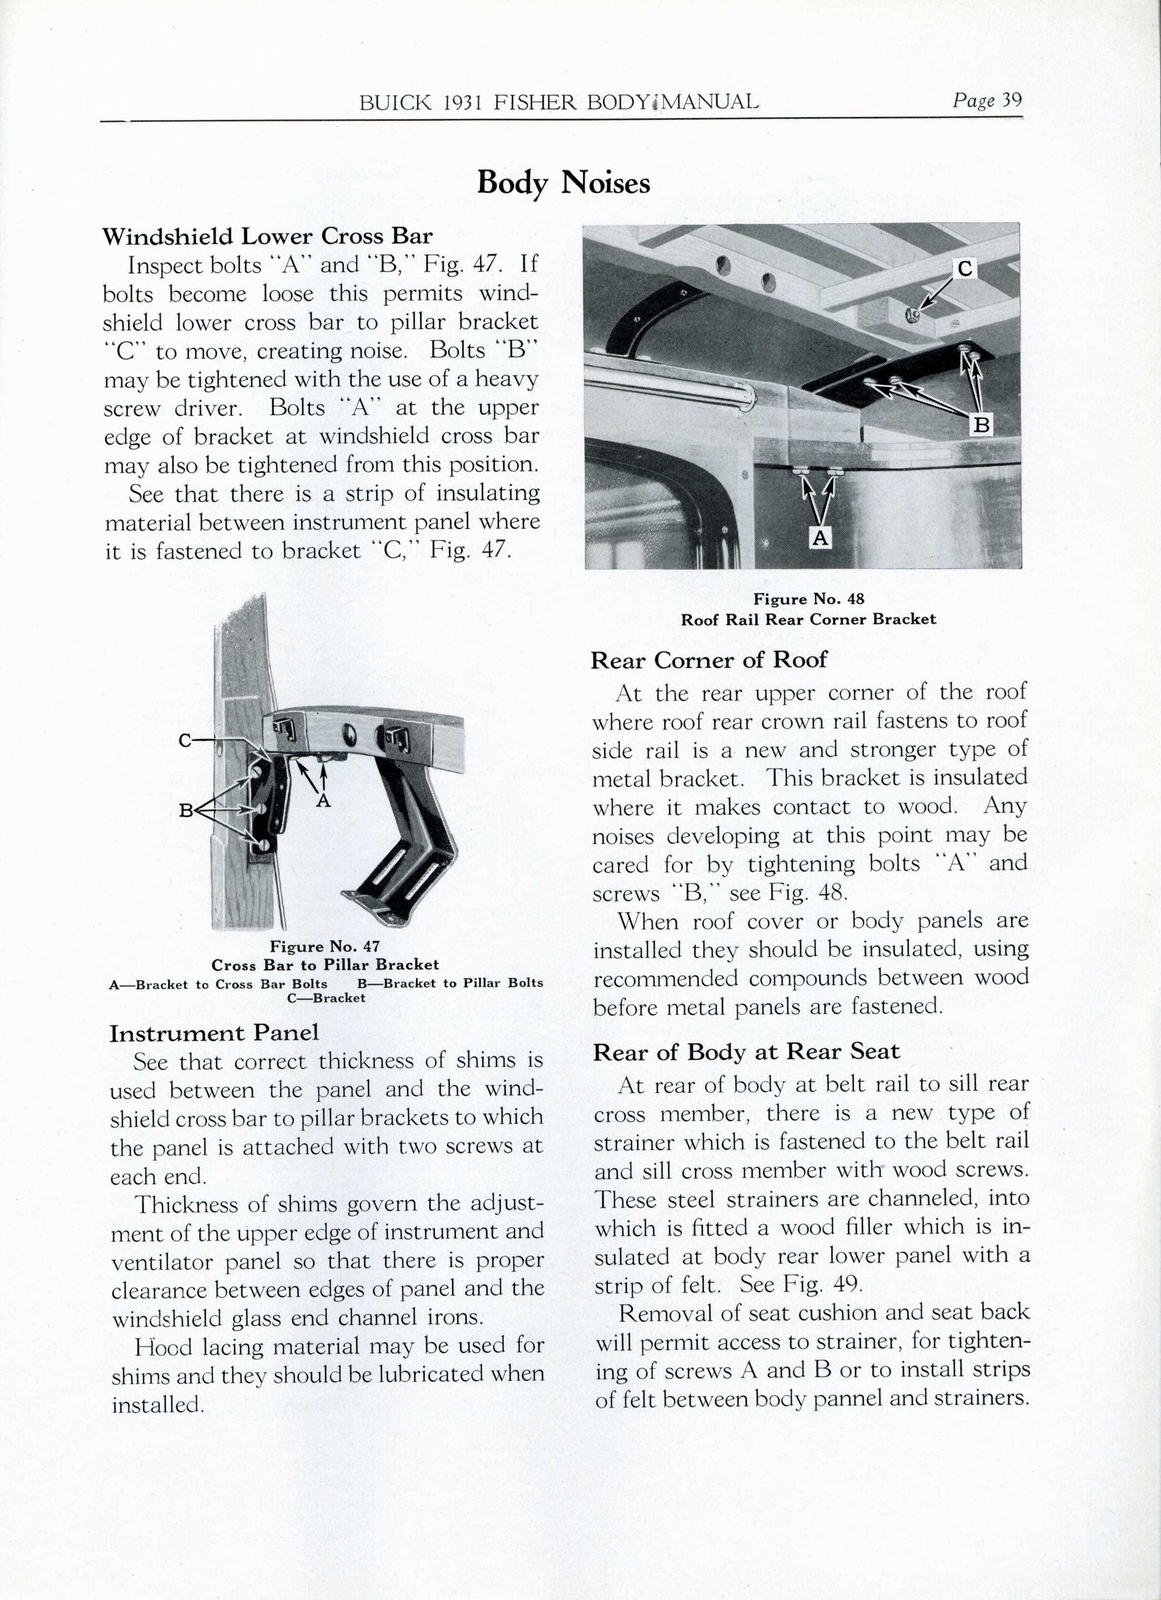 n_1931 Buick Fisher Body Manual-39.jpg